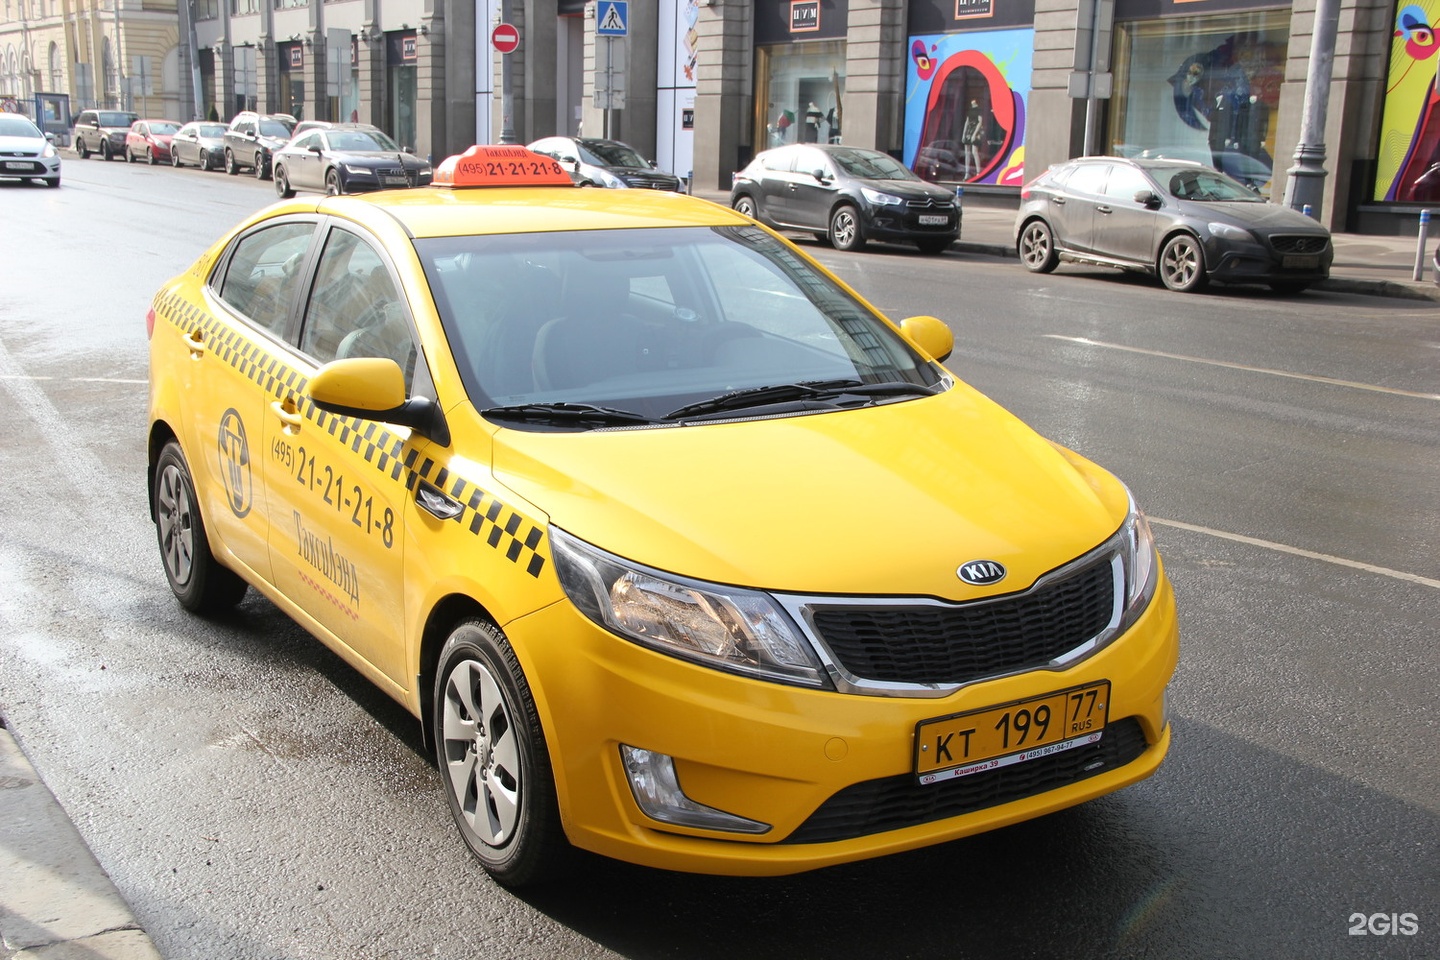 Закажи таксист. Машина "такси". Автомобиль «такси». Желтое такси. Такса в машине.